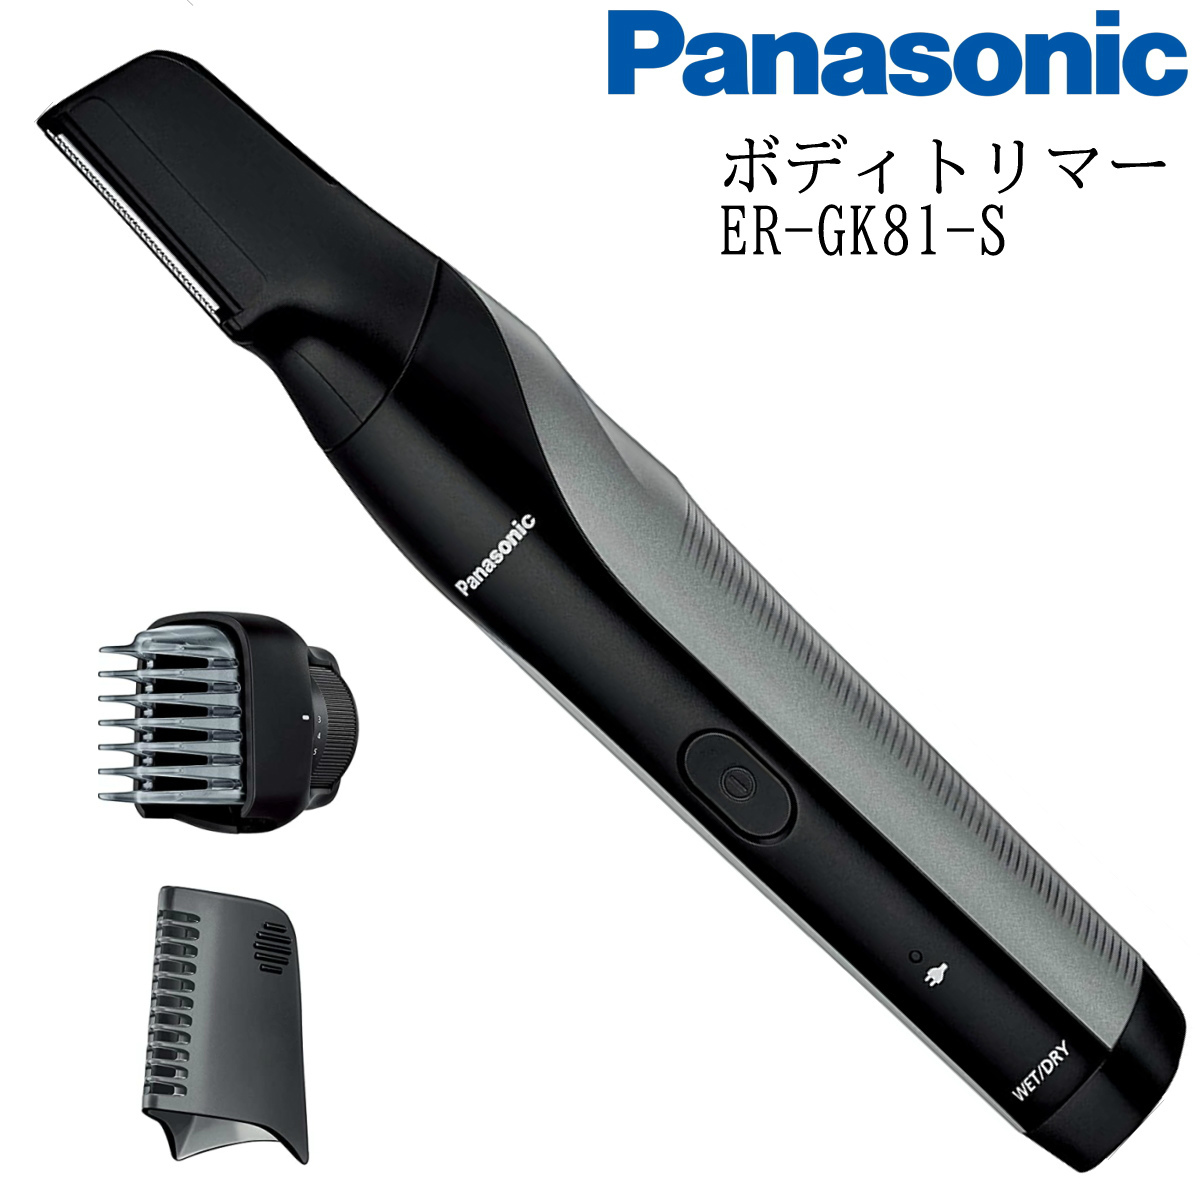 Panasonic パナソニック ボディトリマー お風呂剃り可 ER-GK81-S 